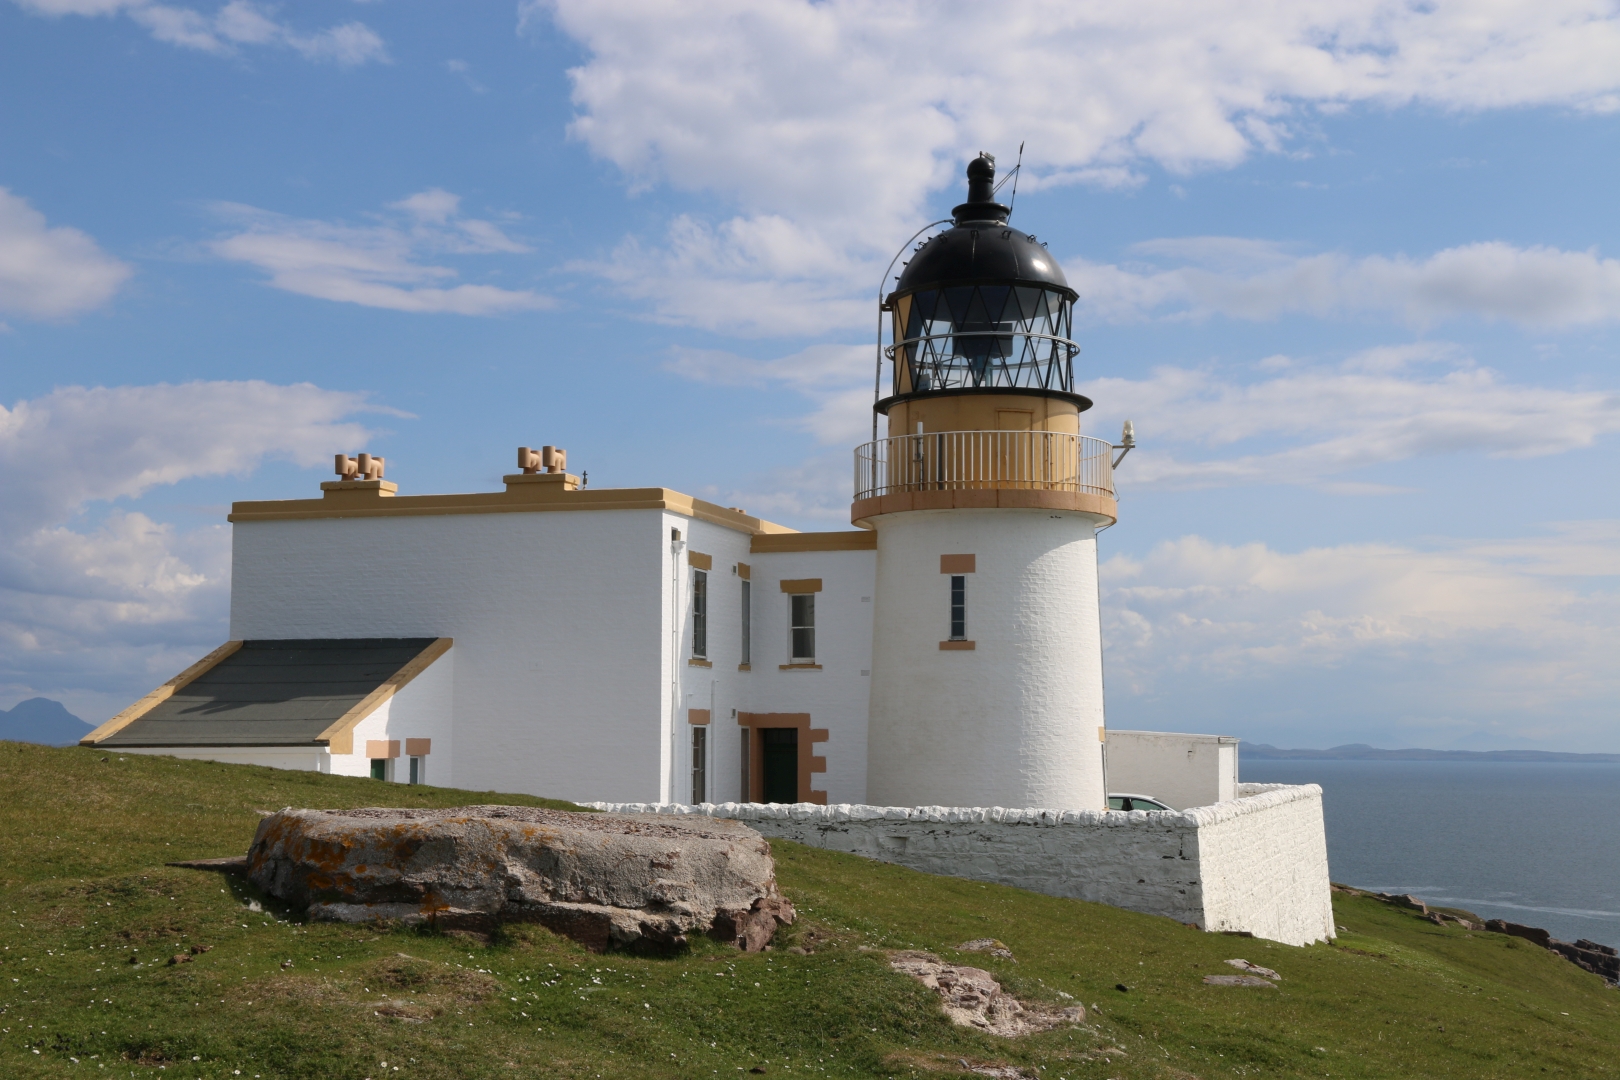 Stoer Head Lighthouse